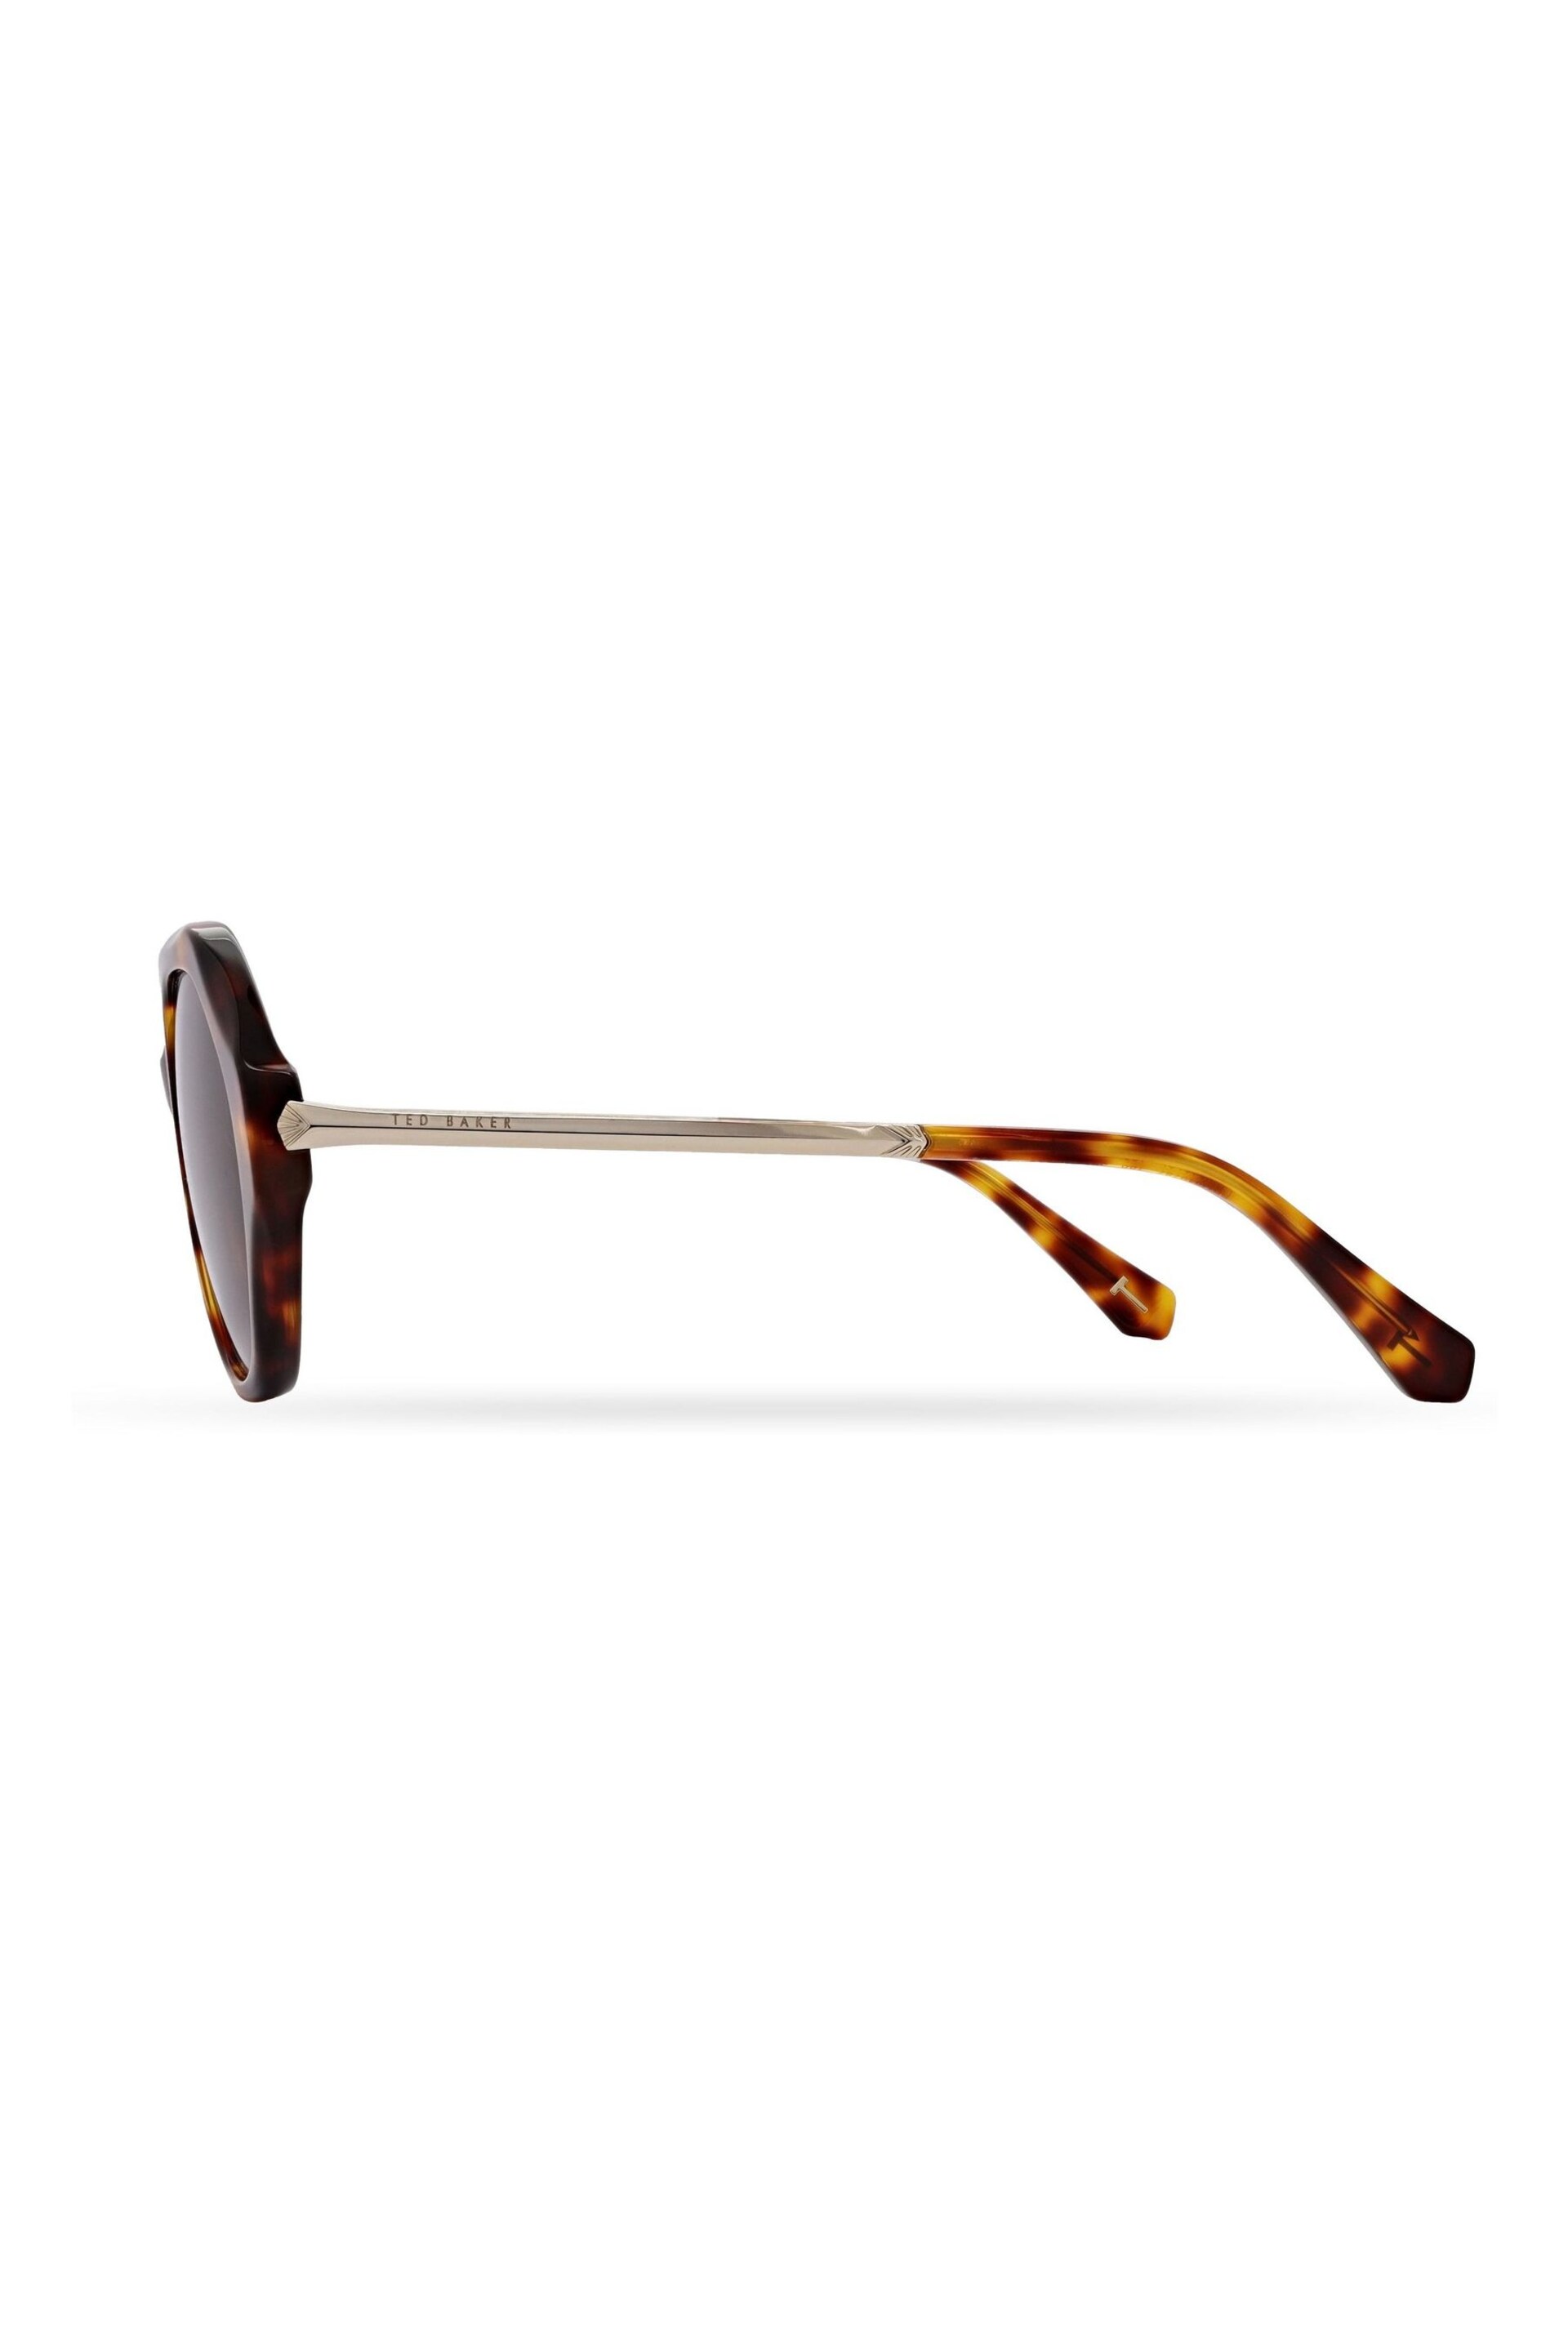 Ted Baker Black Chase Sunglasses - Image 3 of 5